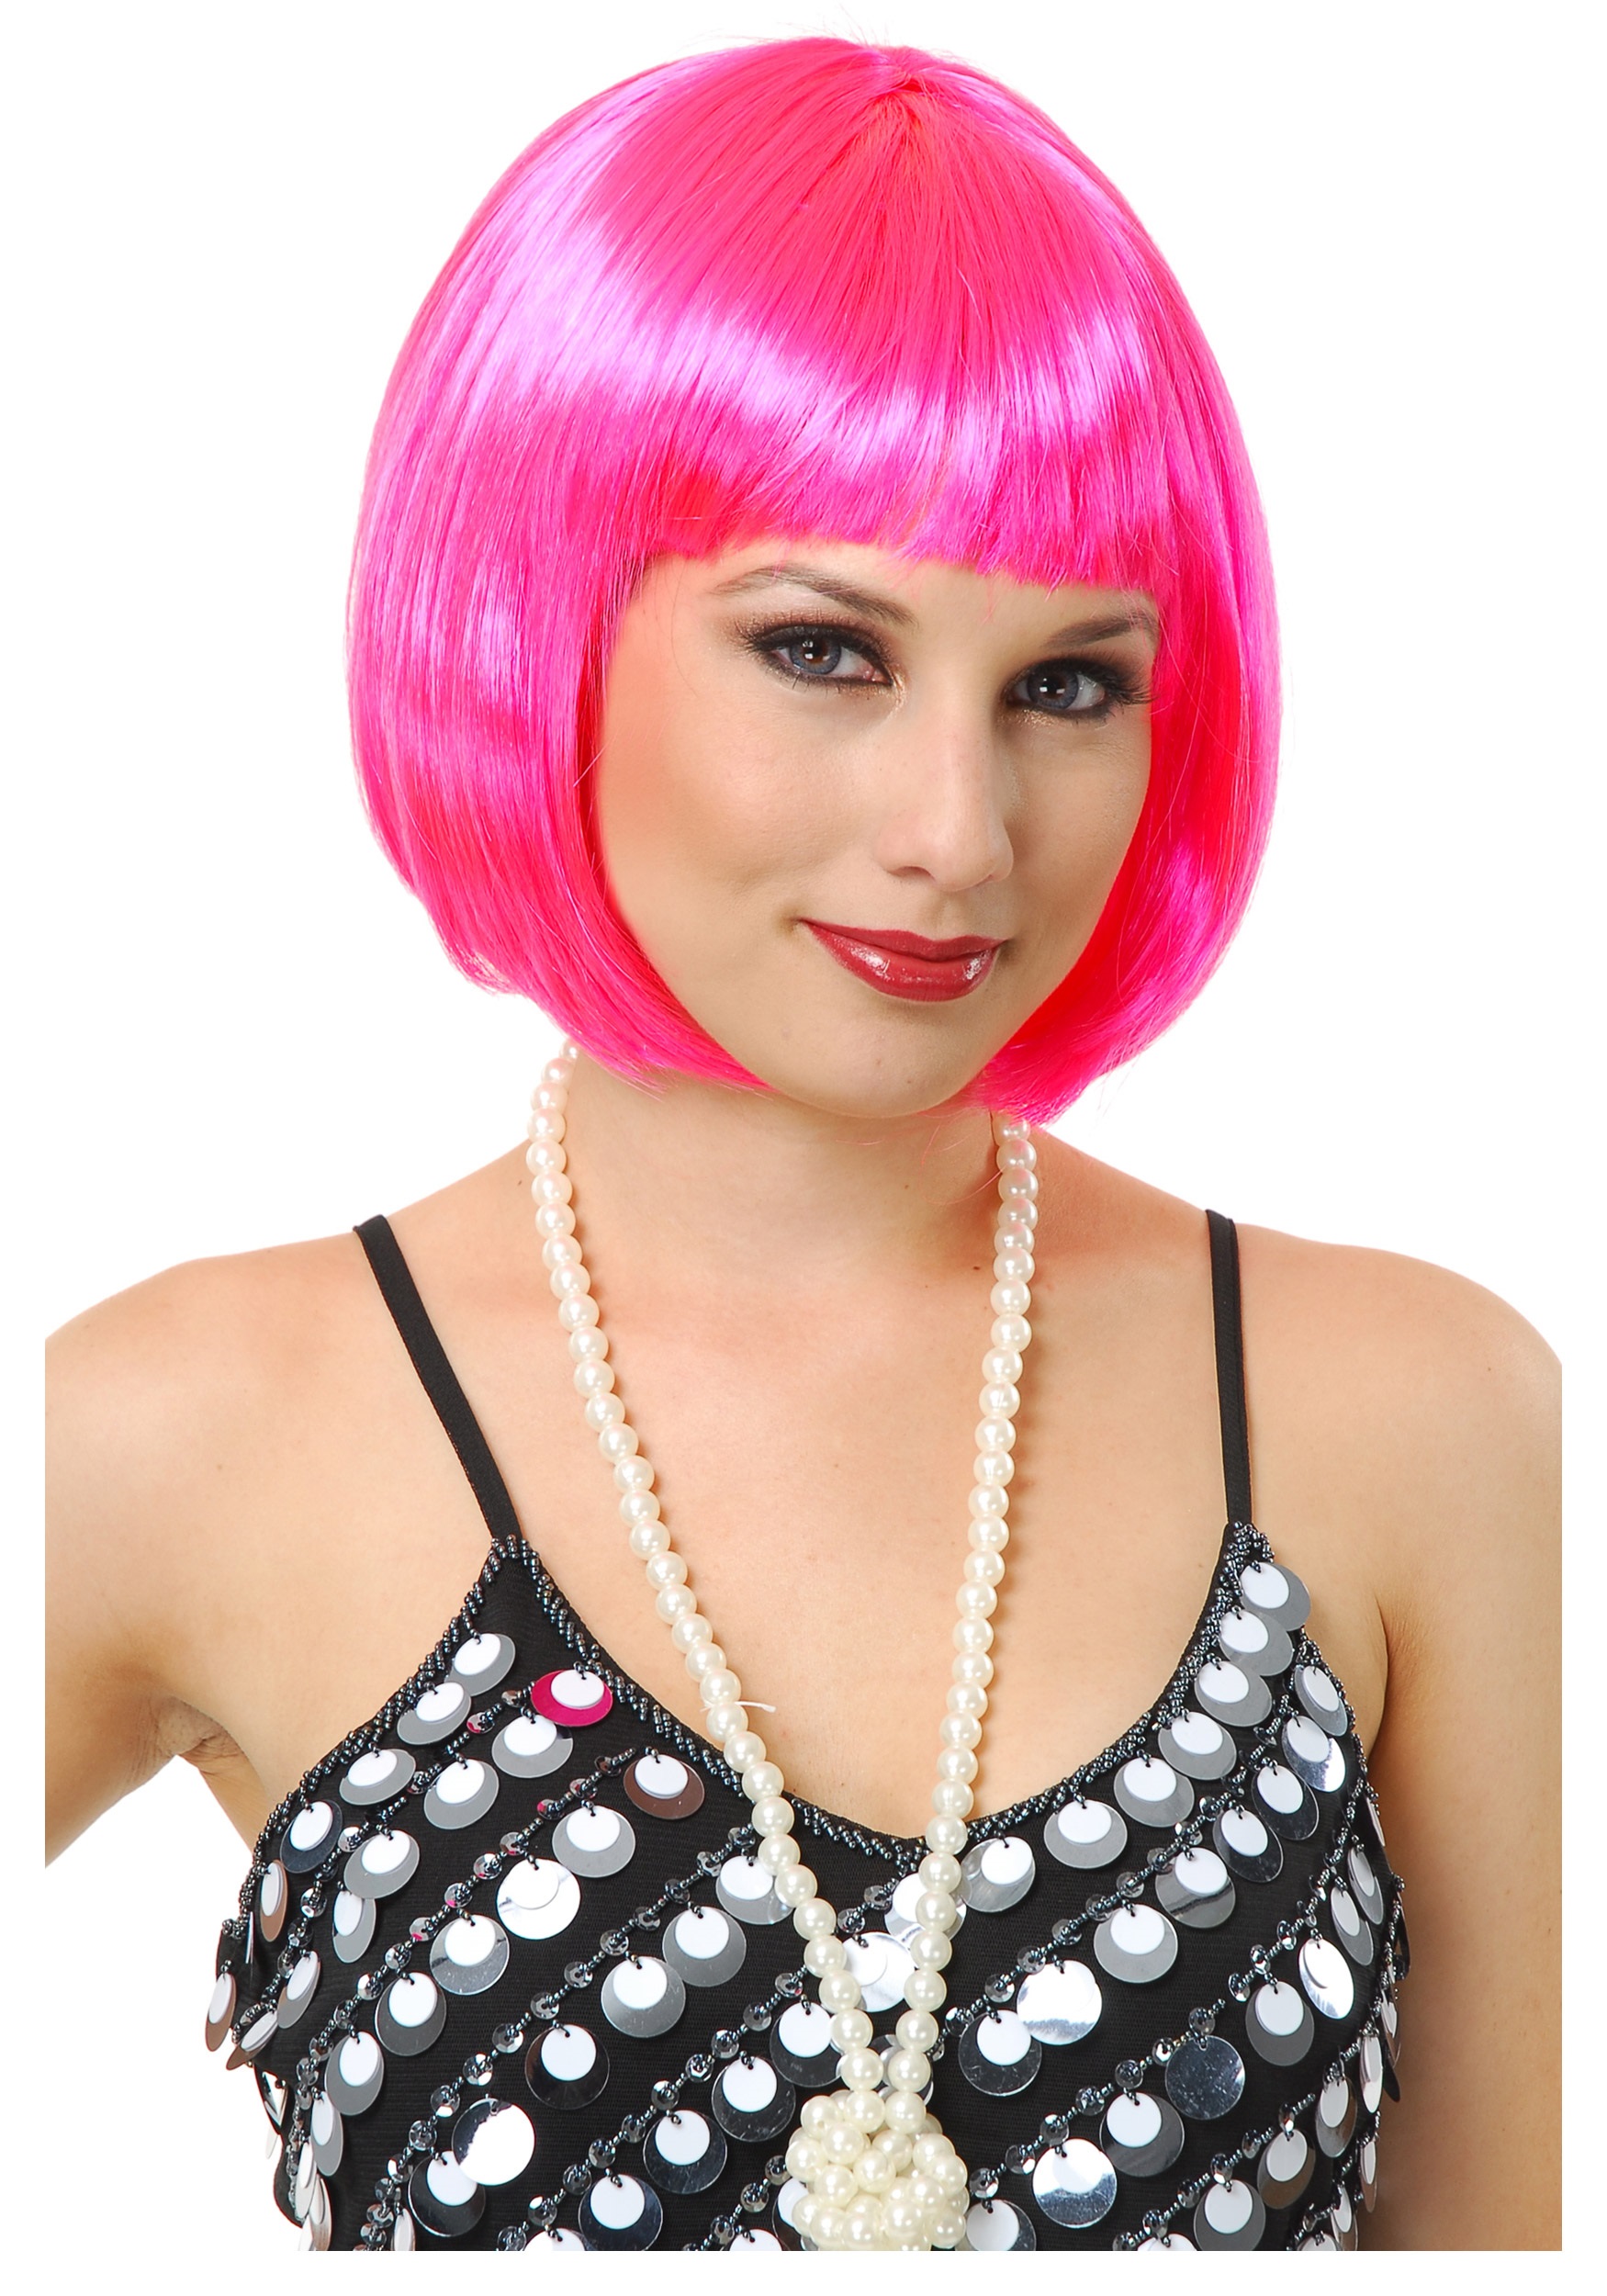 http://images.halloweencostumes.com/products/1921/1-1/short-bob-hot-pink-wig.jpg